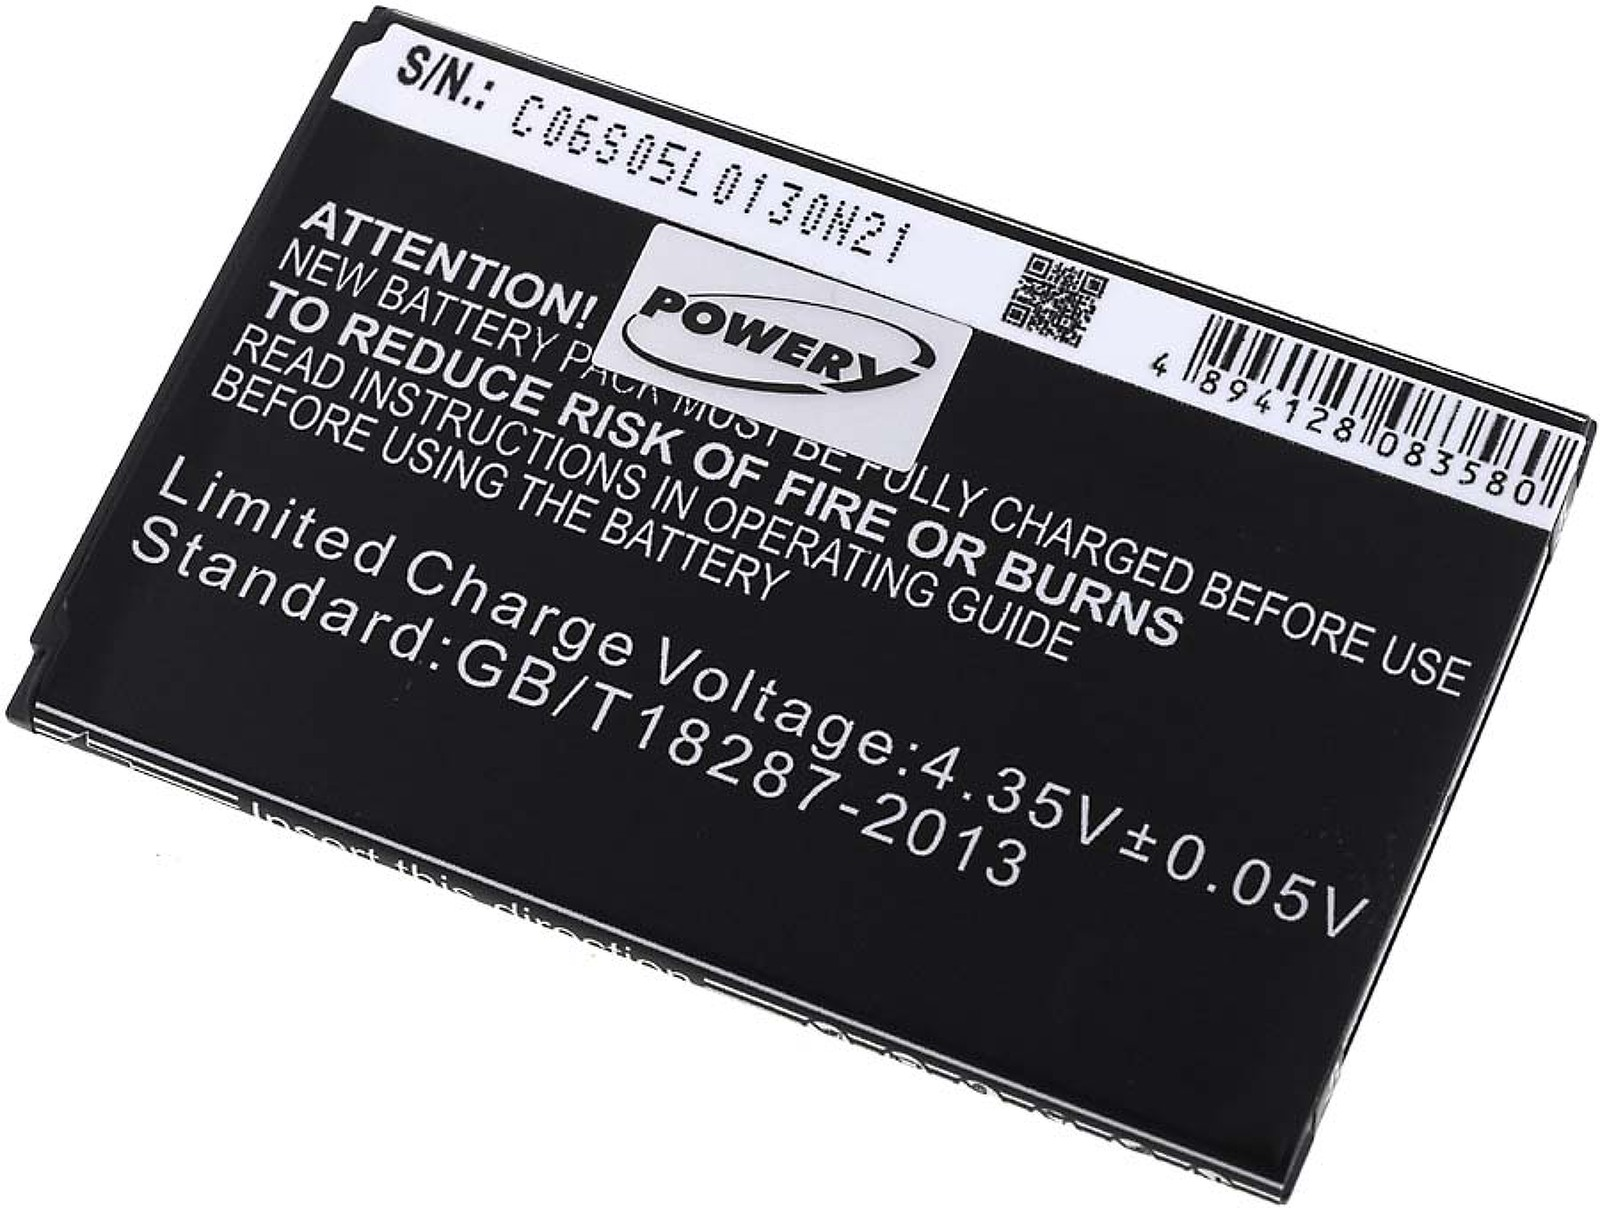 POWERY Akku Volt, für Akku, SM-N7502 1800mAh 3.8 Li-Ion Samsung